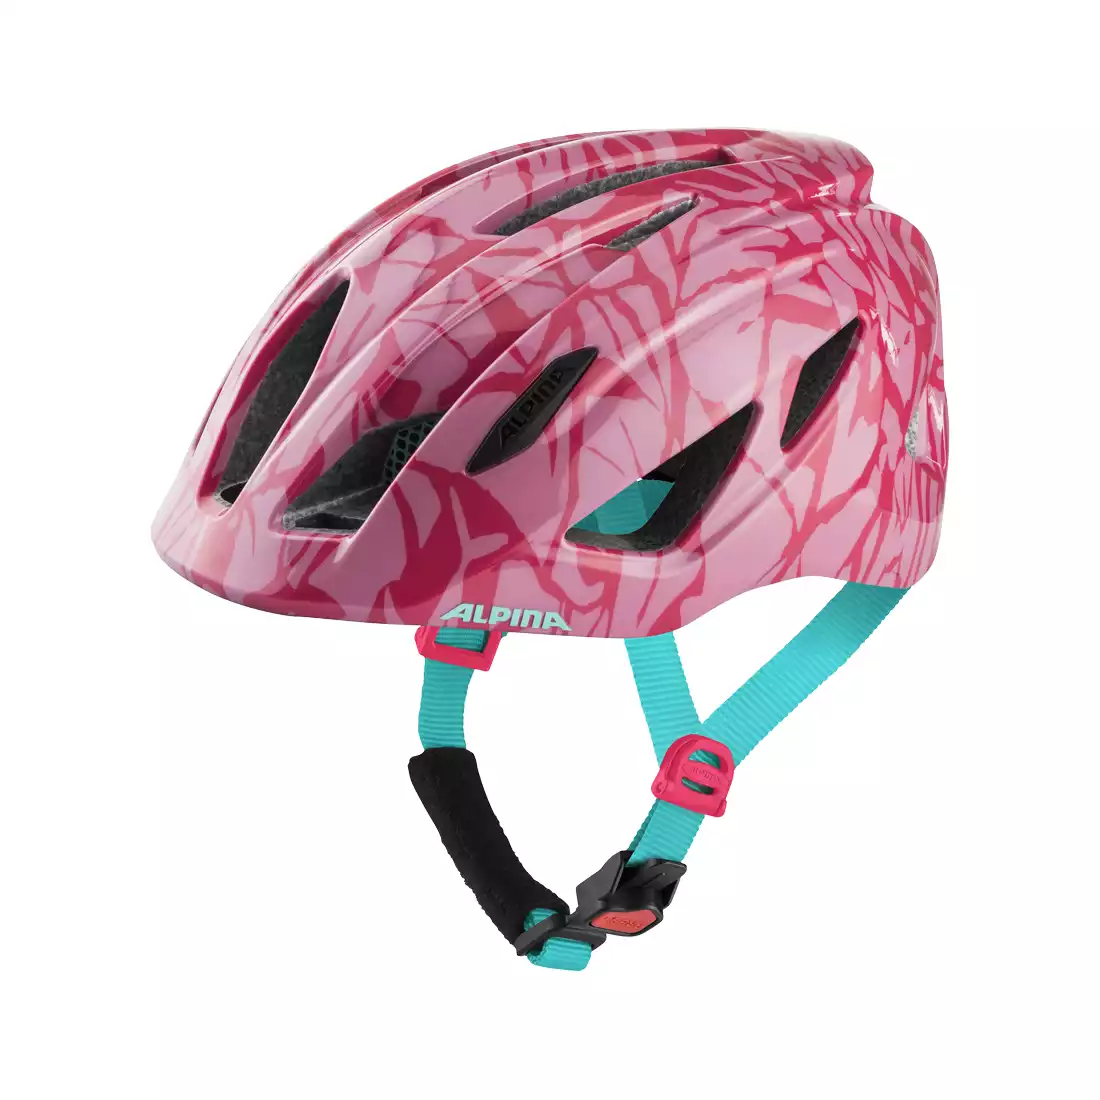 ALPINA PICO Children's bicycle helmet, pink-sparkel gloss